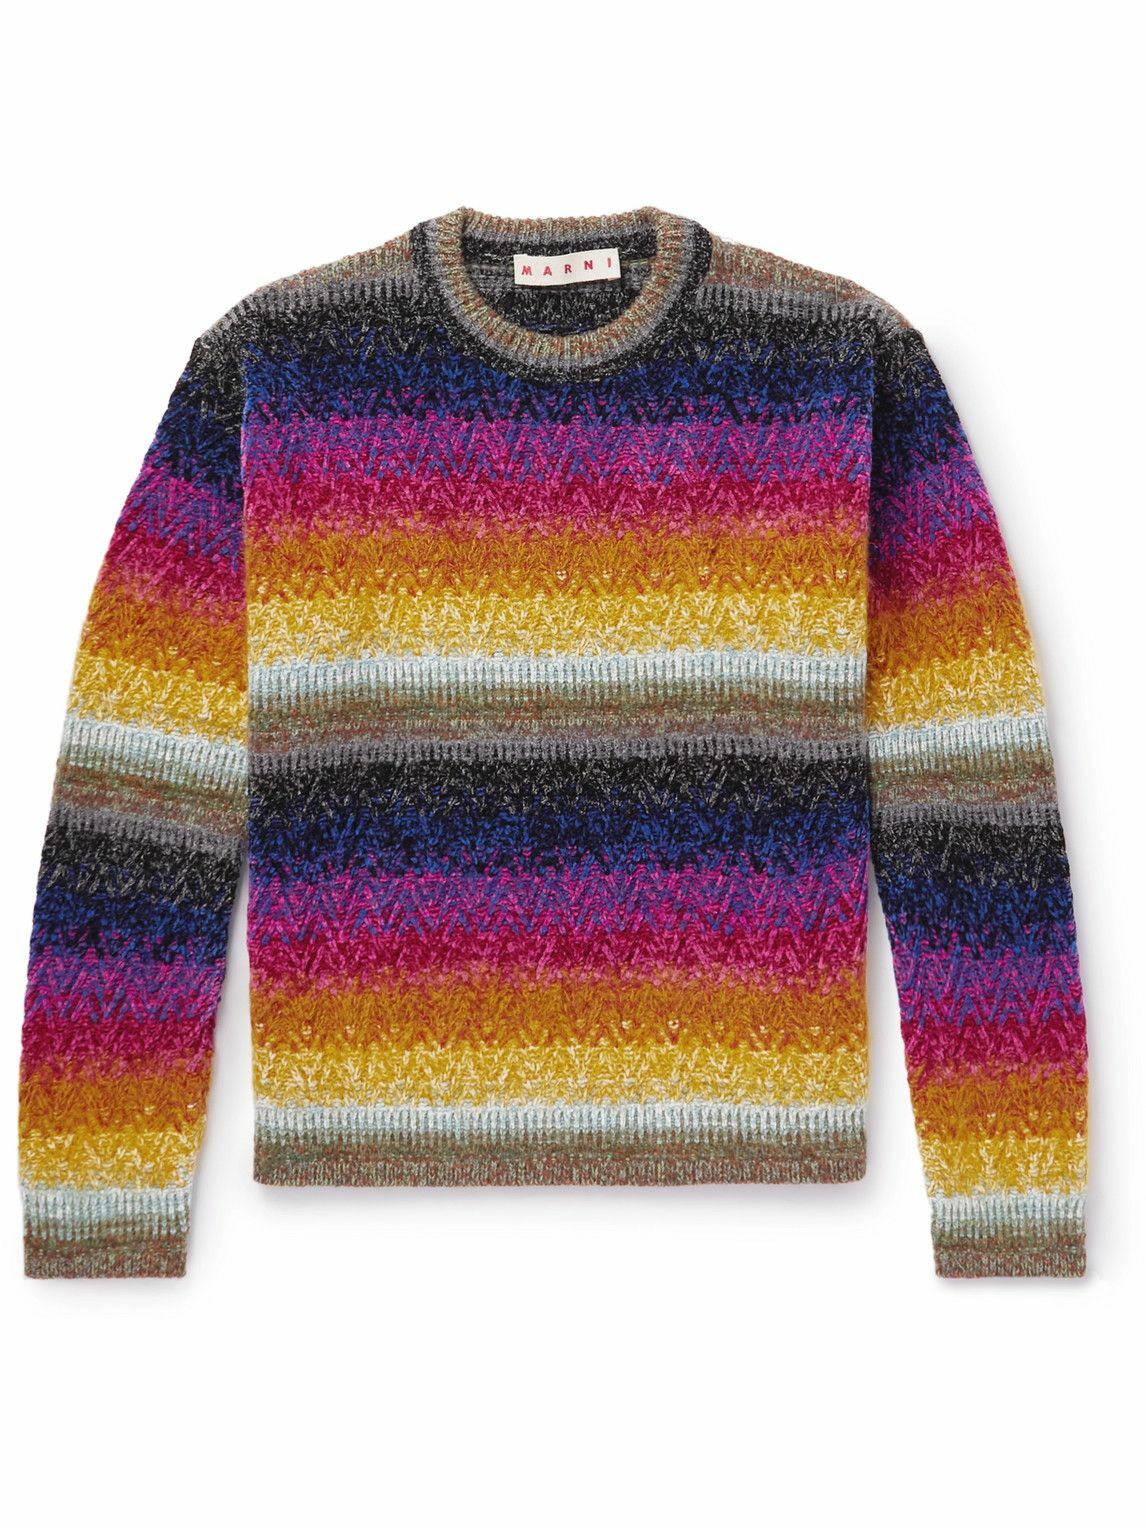 Marni - Striped Mohair and Virgin Wool-Blend Sweater - Multi Marni